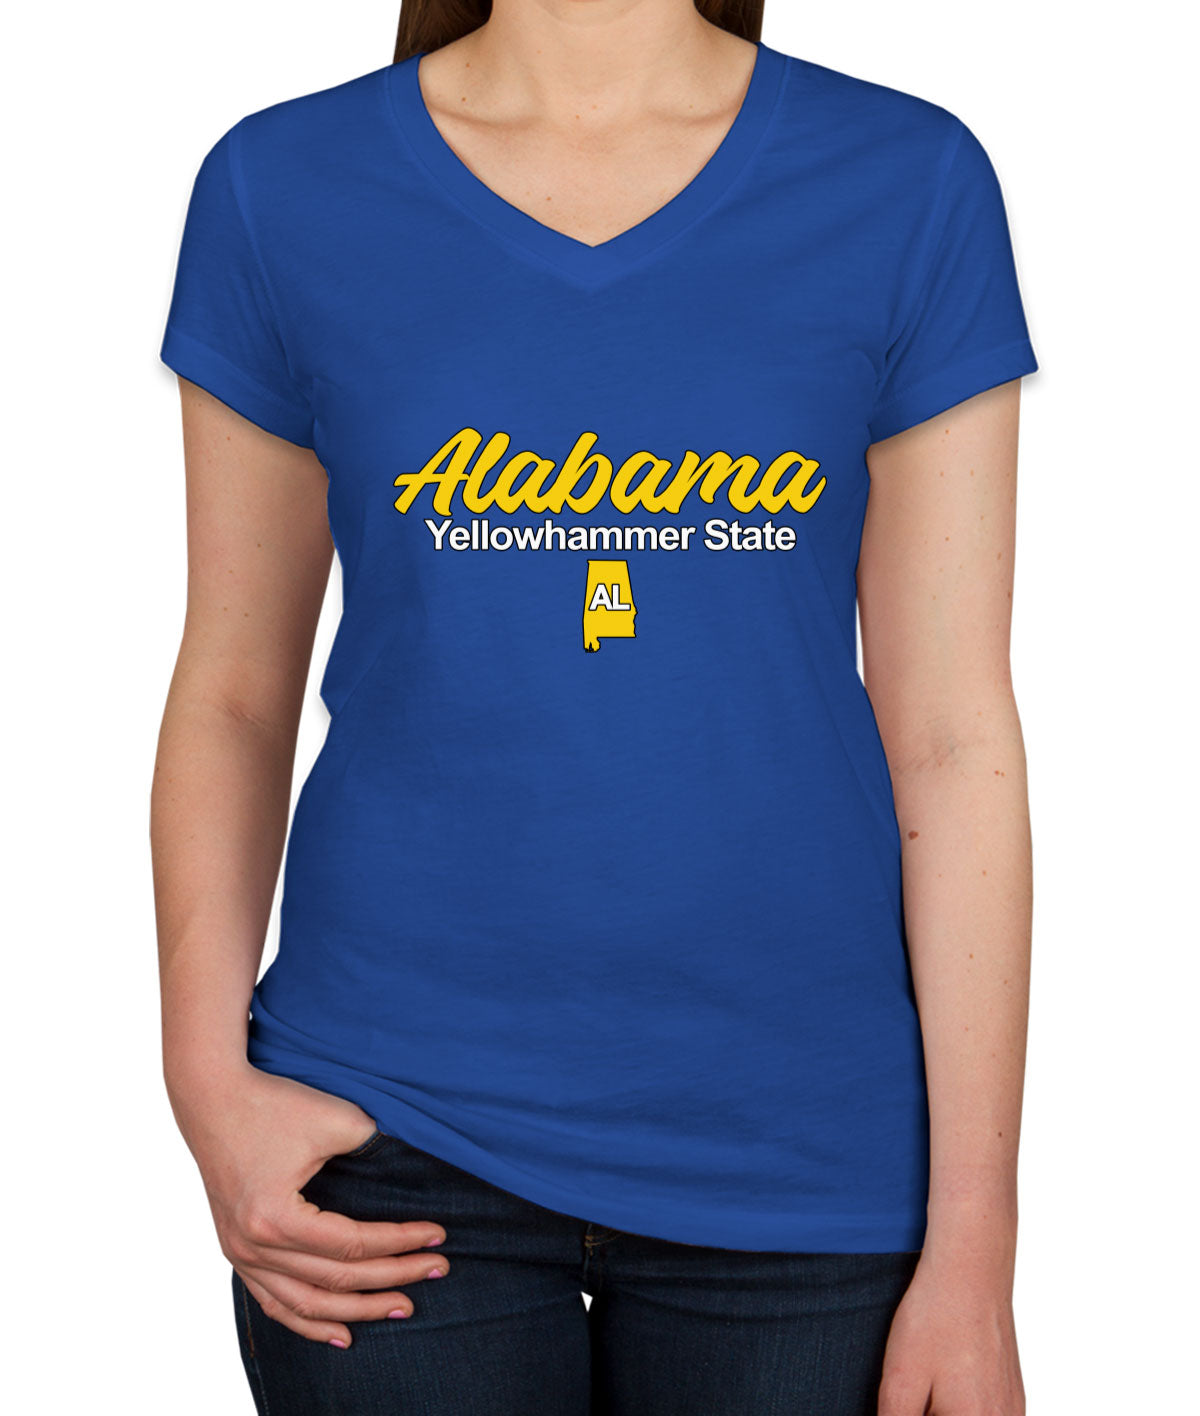 Alabama Yellowhammer State Women's V Neck T-shirt